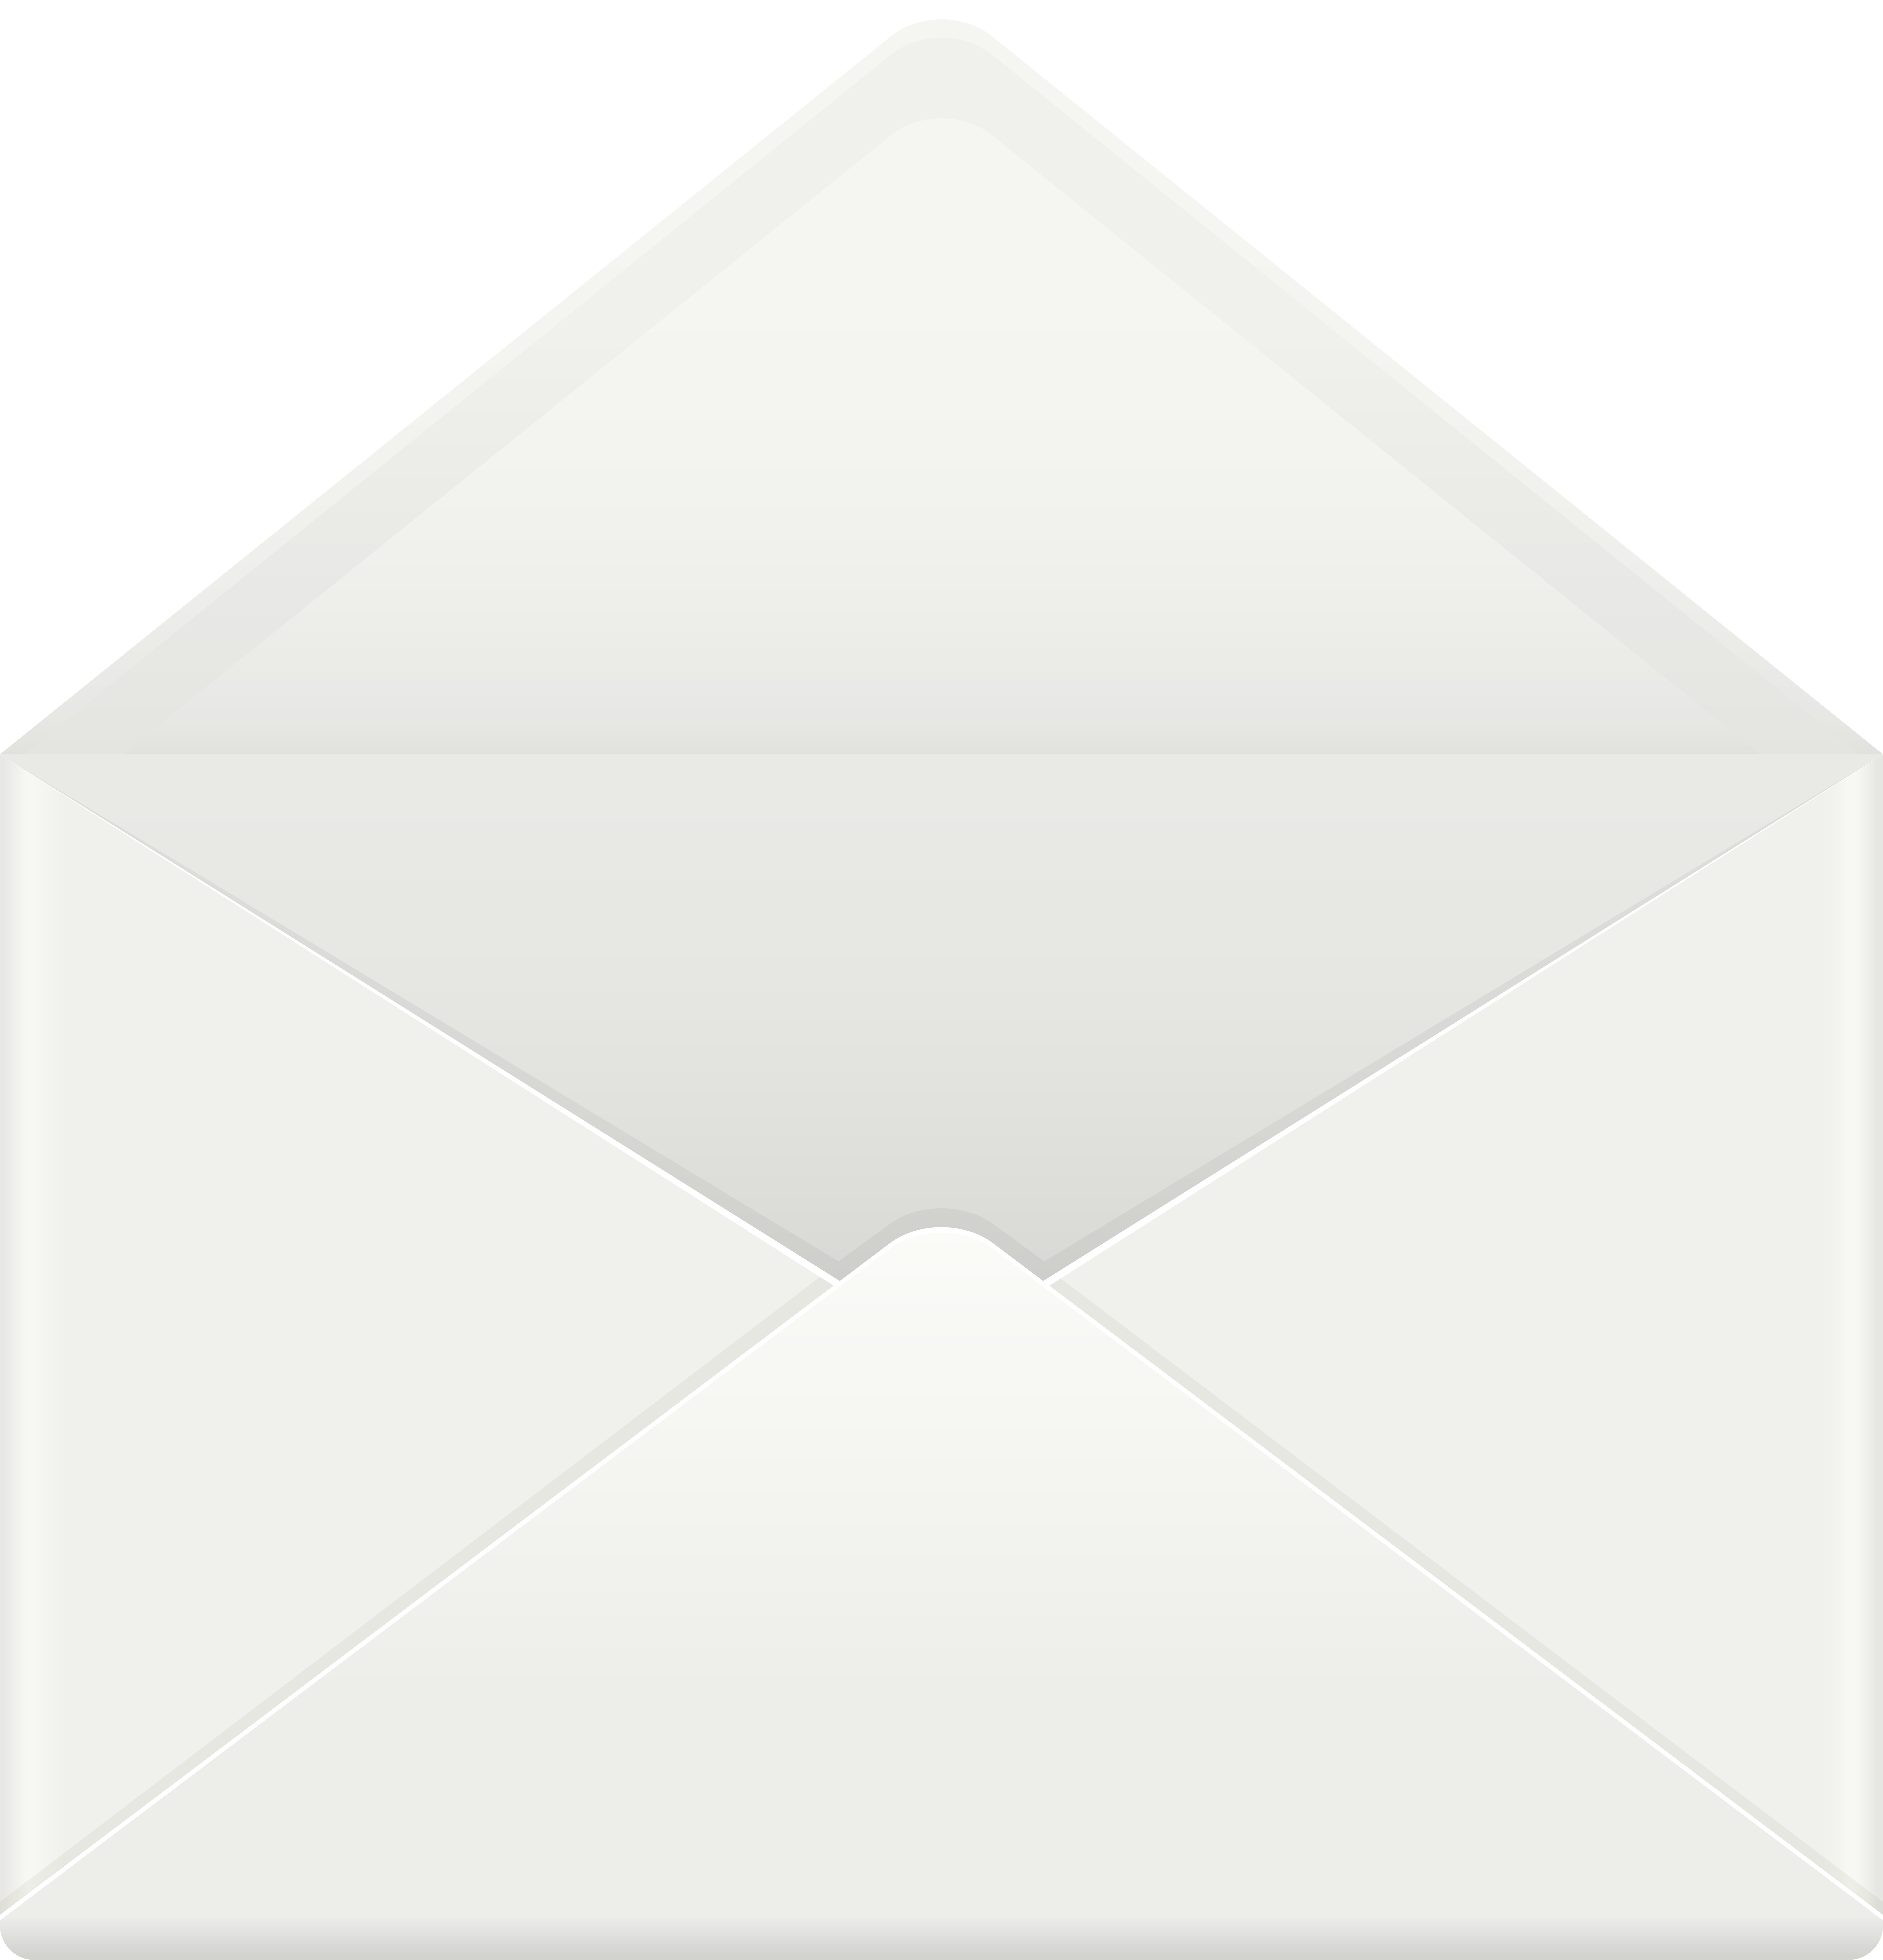 Open Envelope PNG Clip Art Image.